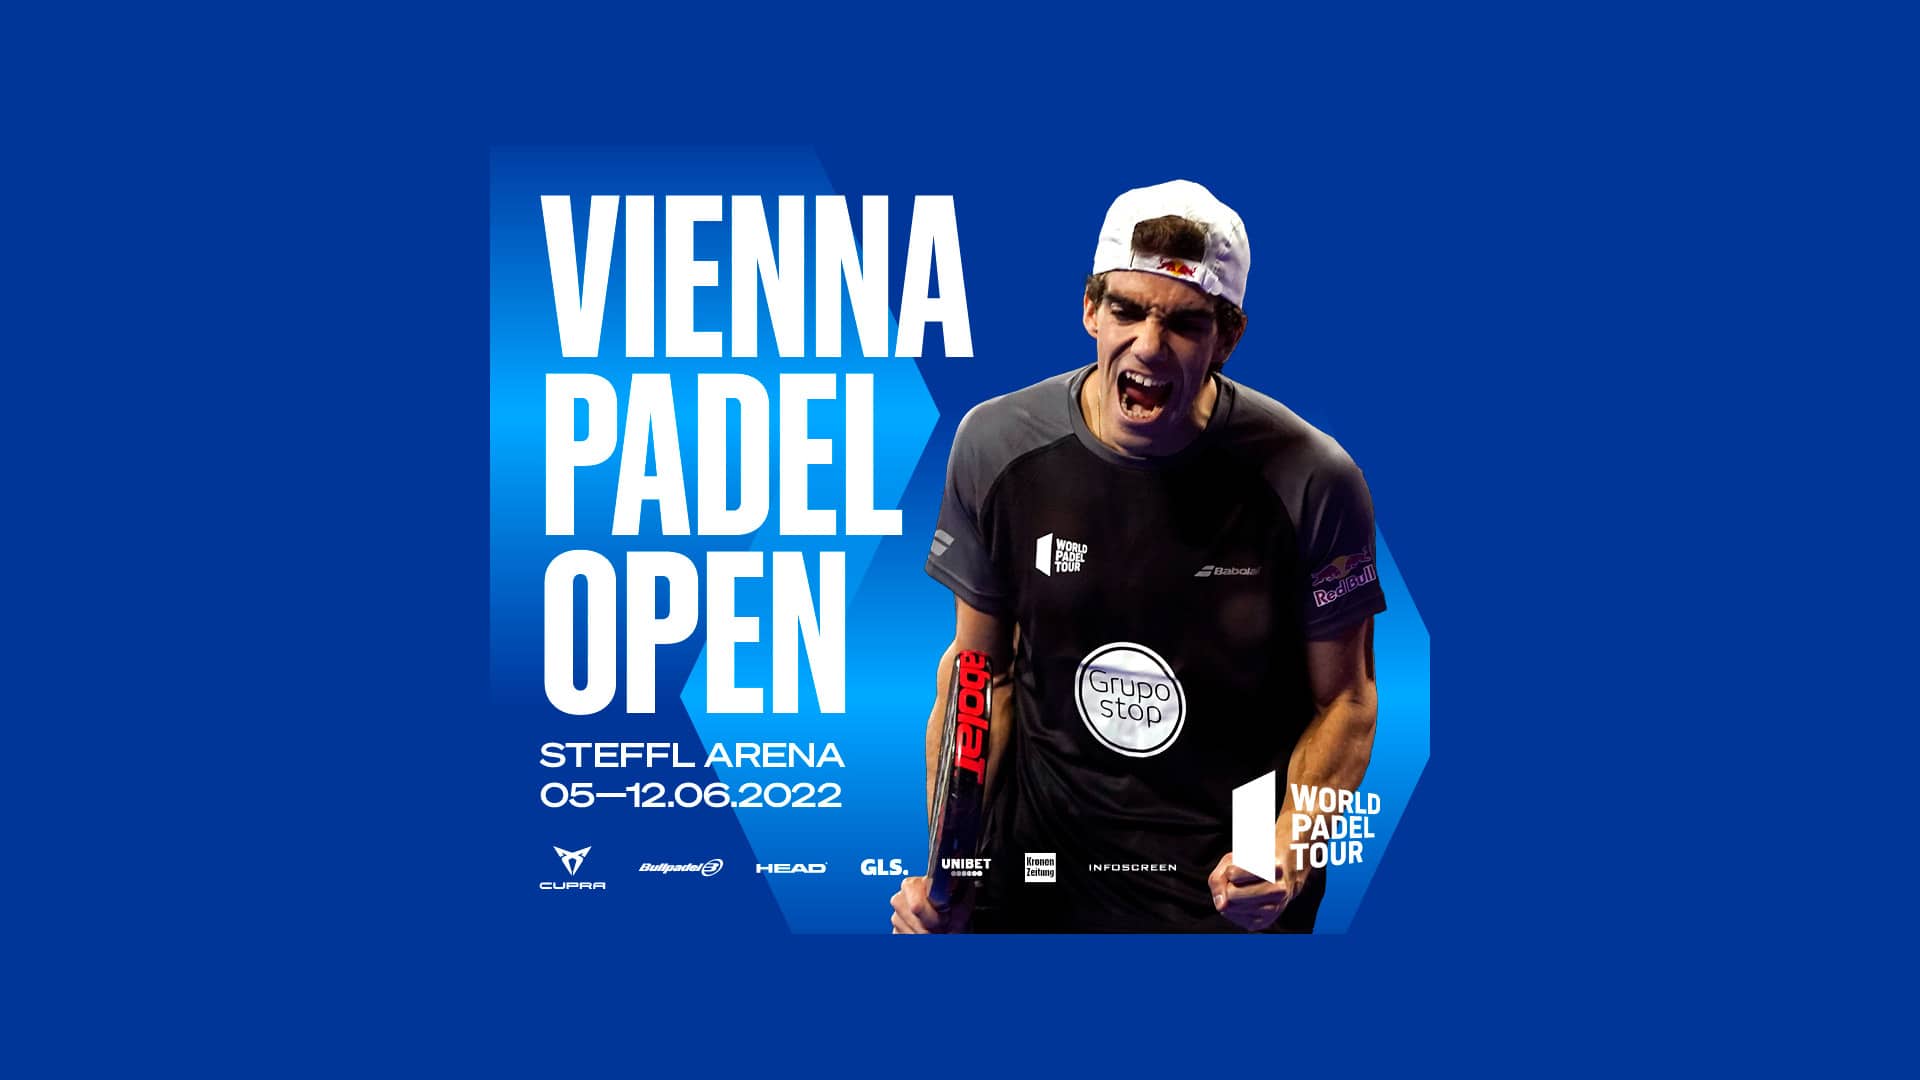 Vienna Padel Open Wien zelebriert WeltklasseTurnier